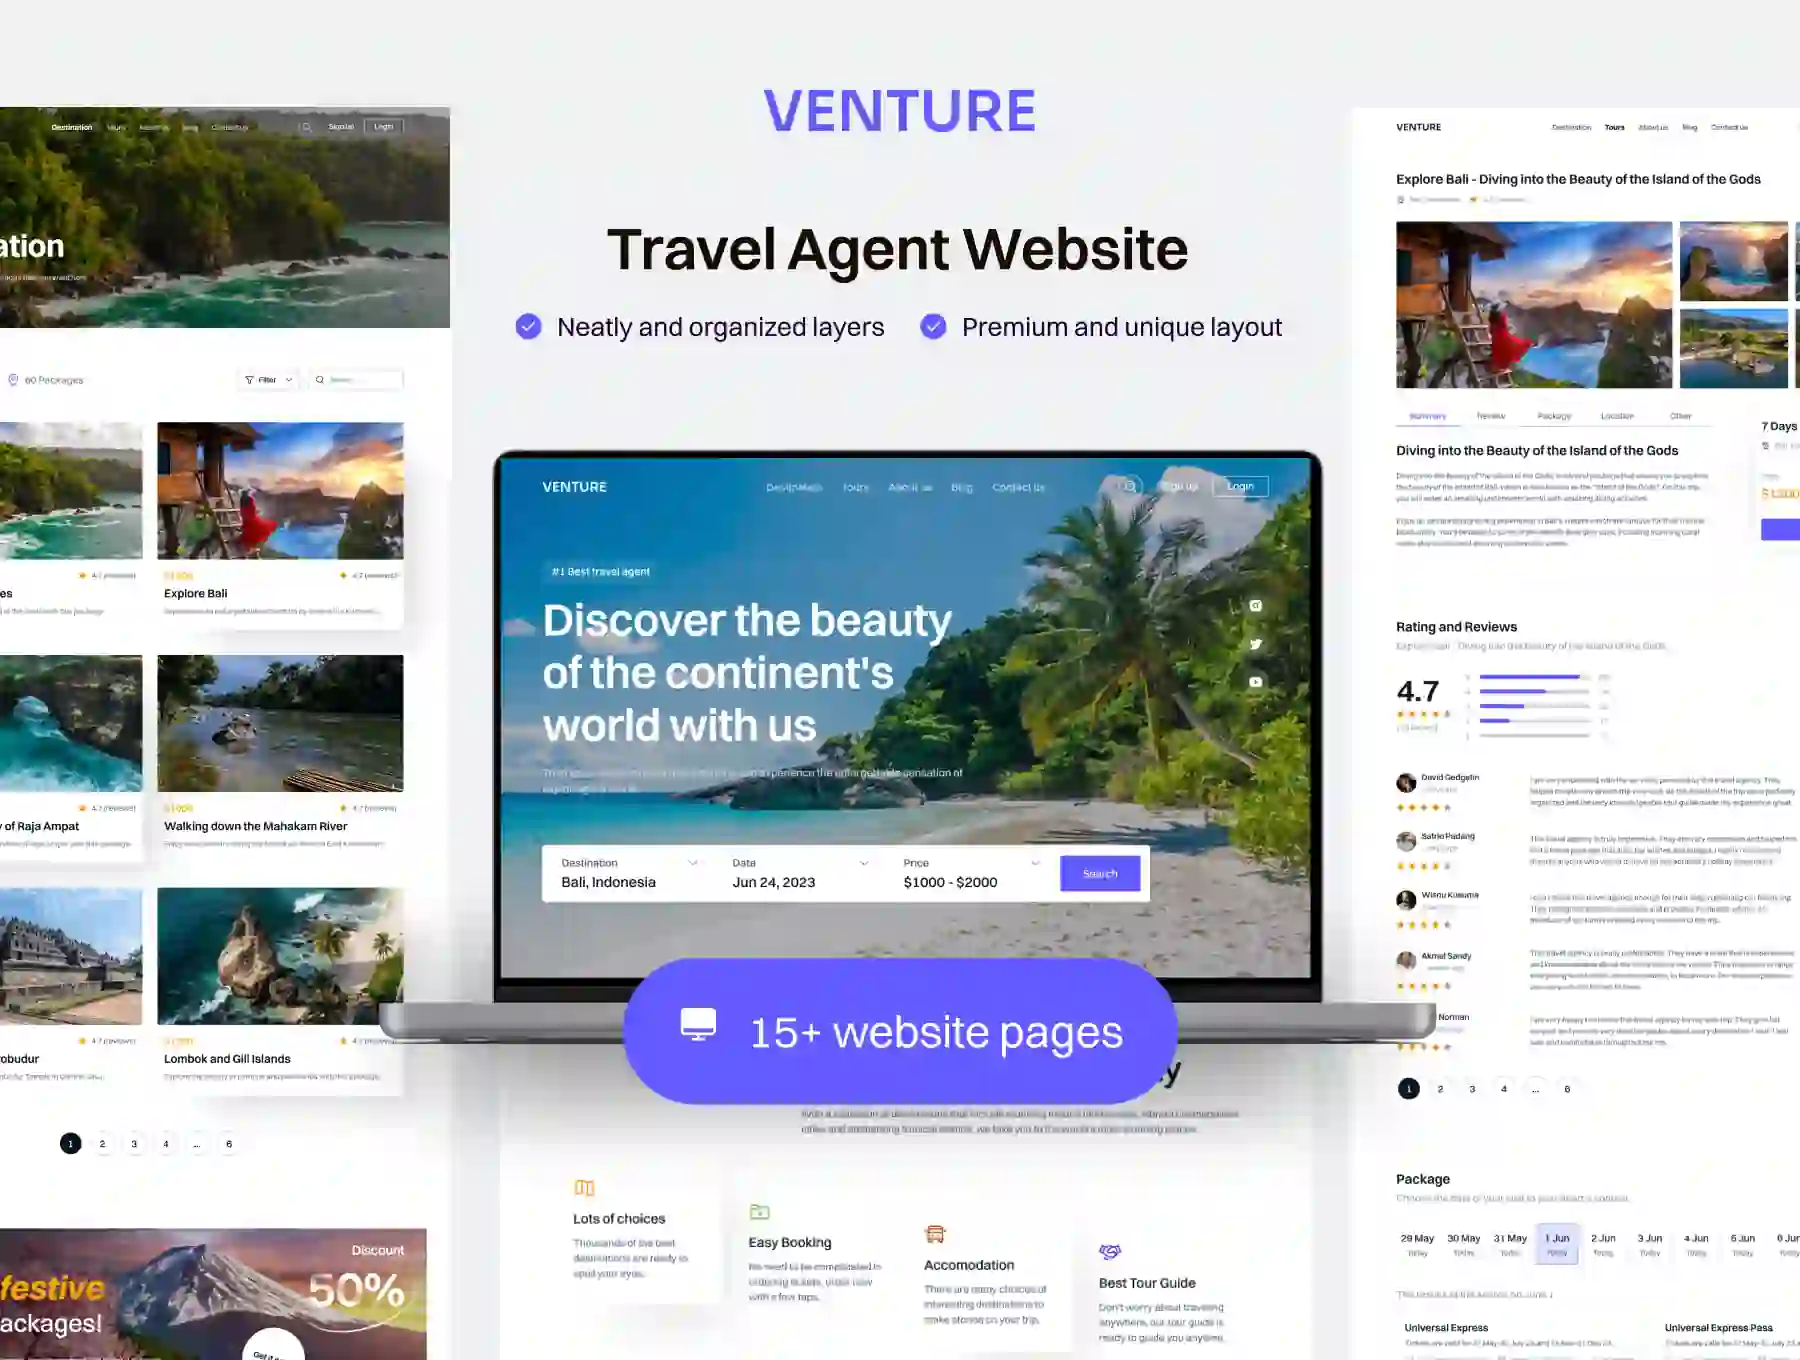 Venture - Travel Agent Website